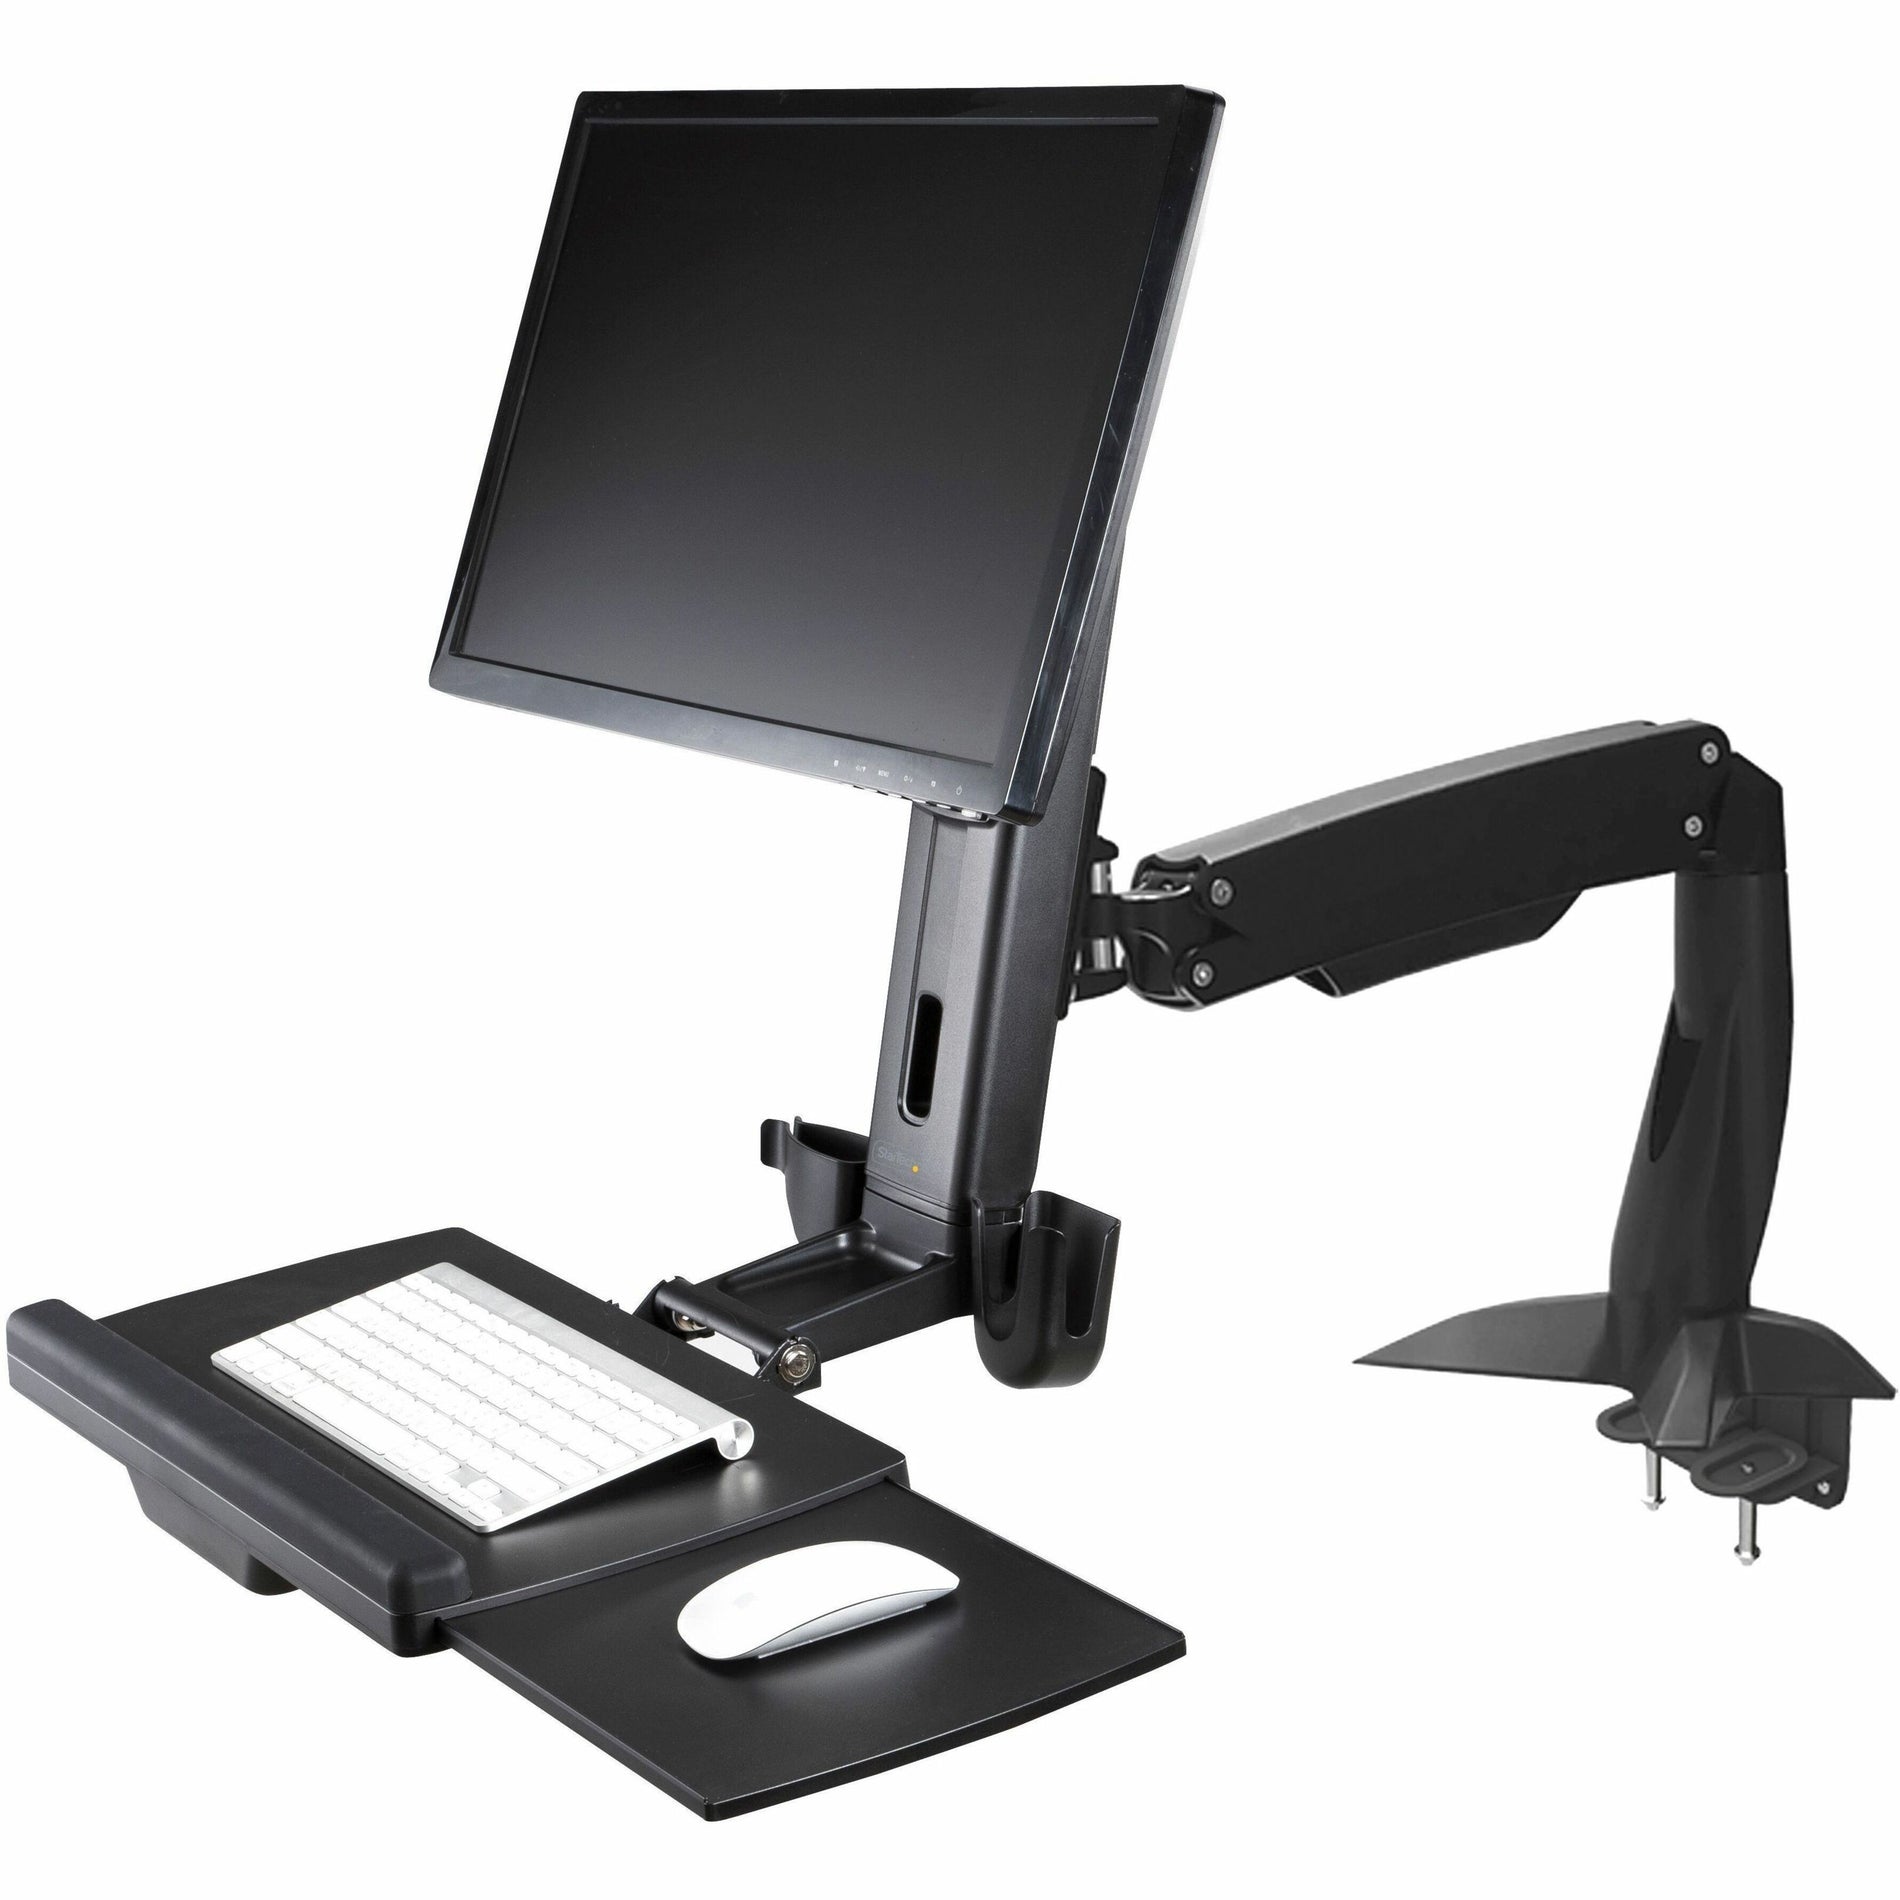 StarTech.com ARMSTSCP1 Sit-Stand Monitor Arm, Height Adjustable Desk Mount for up to 24" Monitors, VESA Mount, Ergonomic Workstation